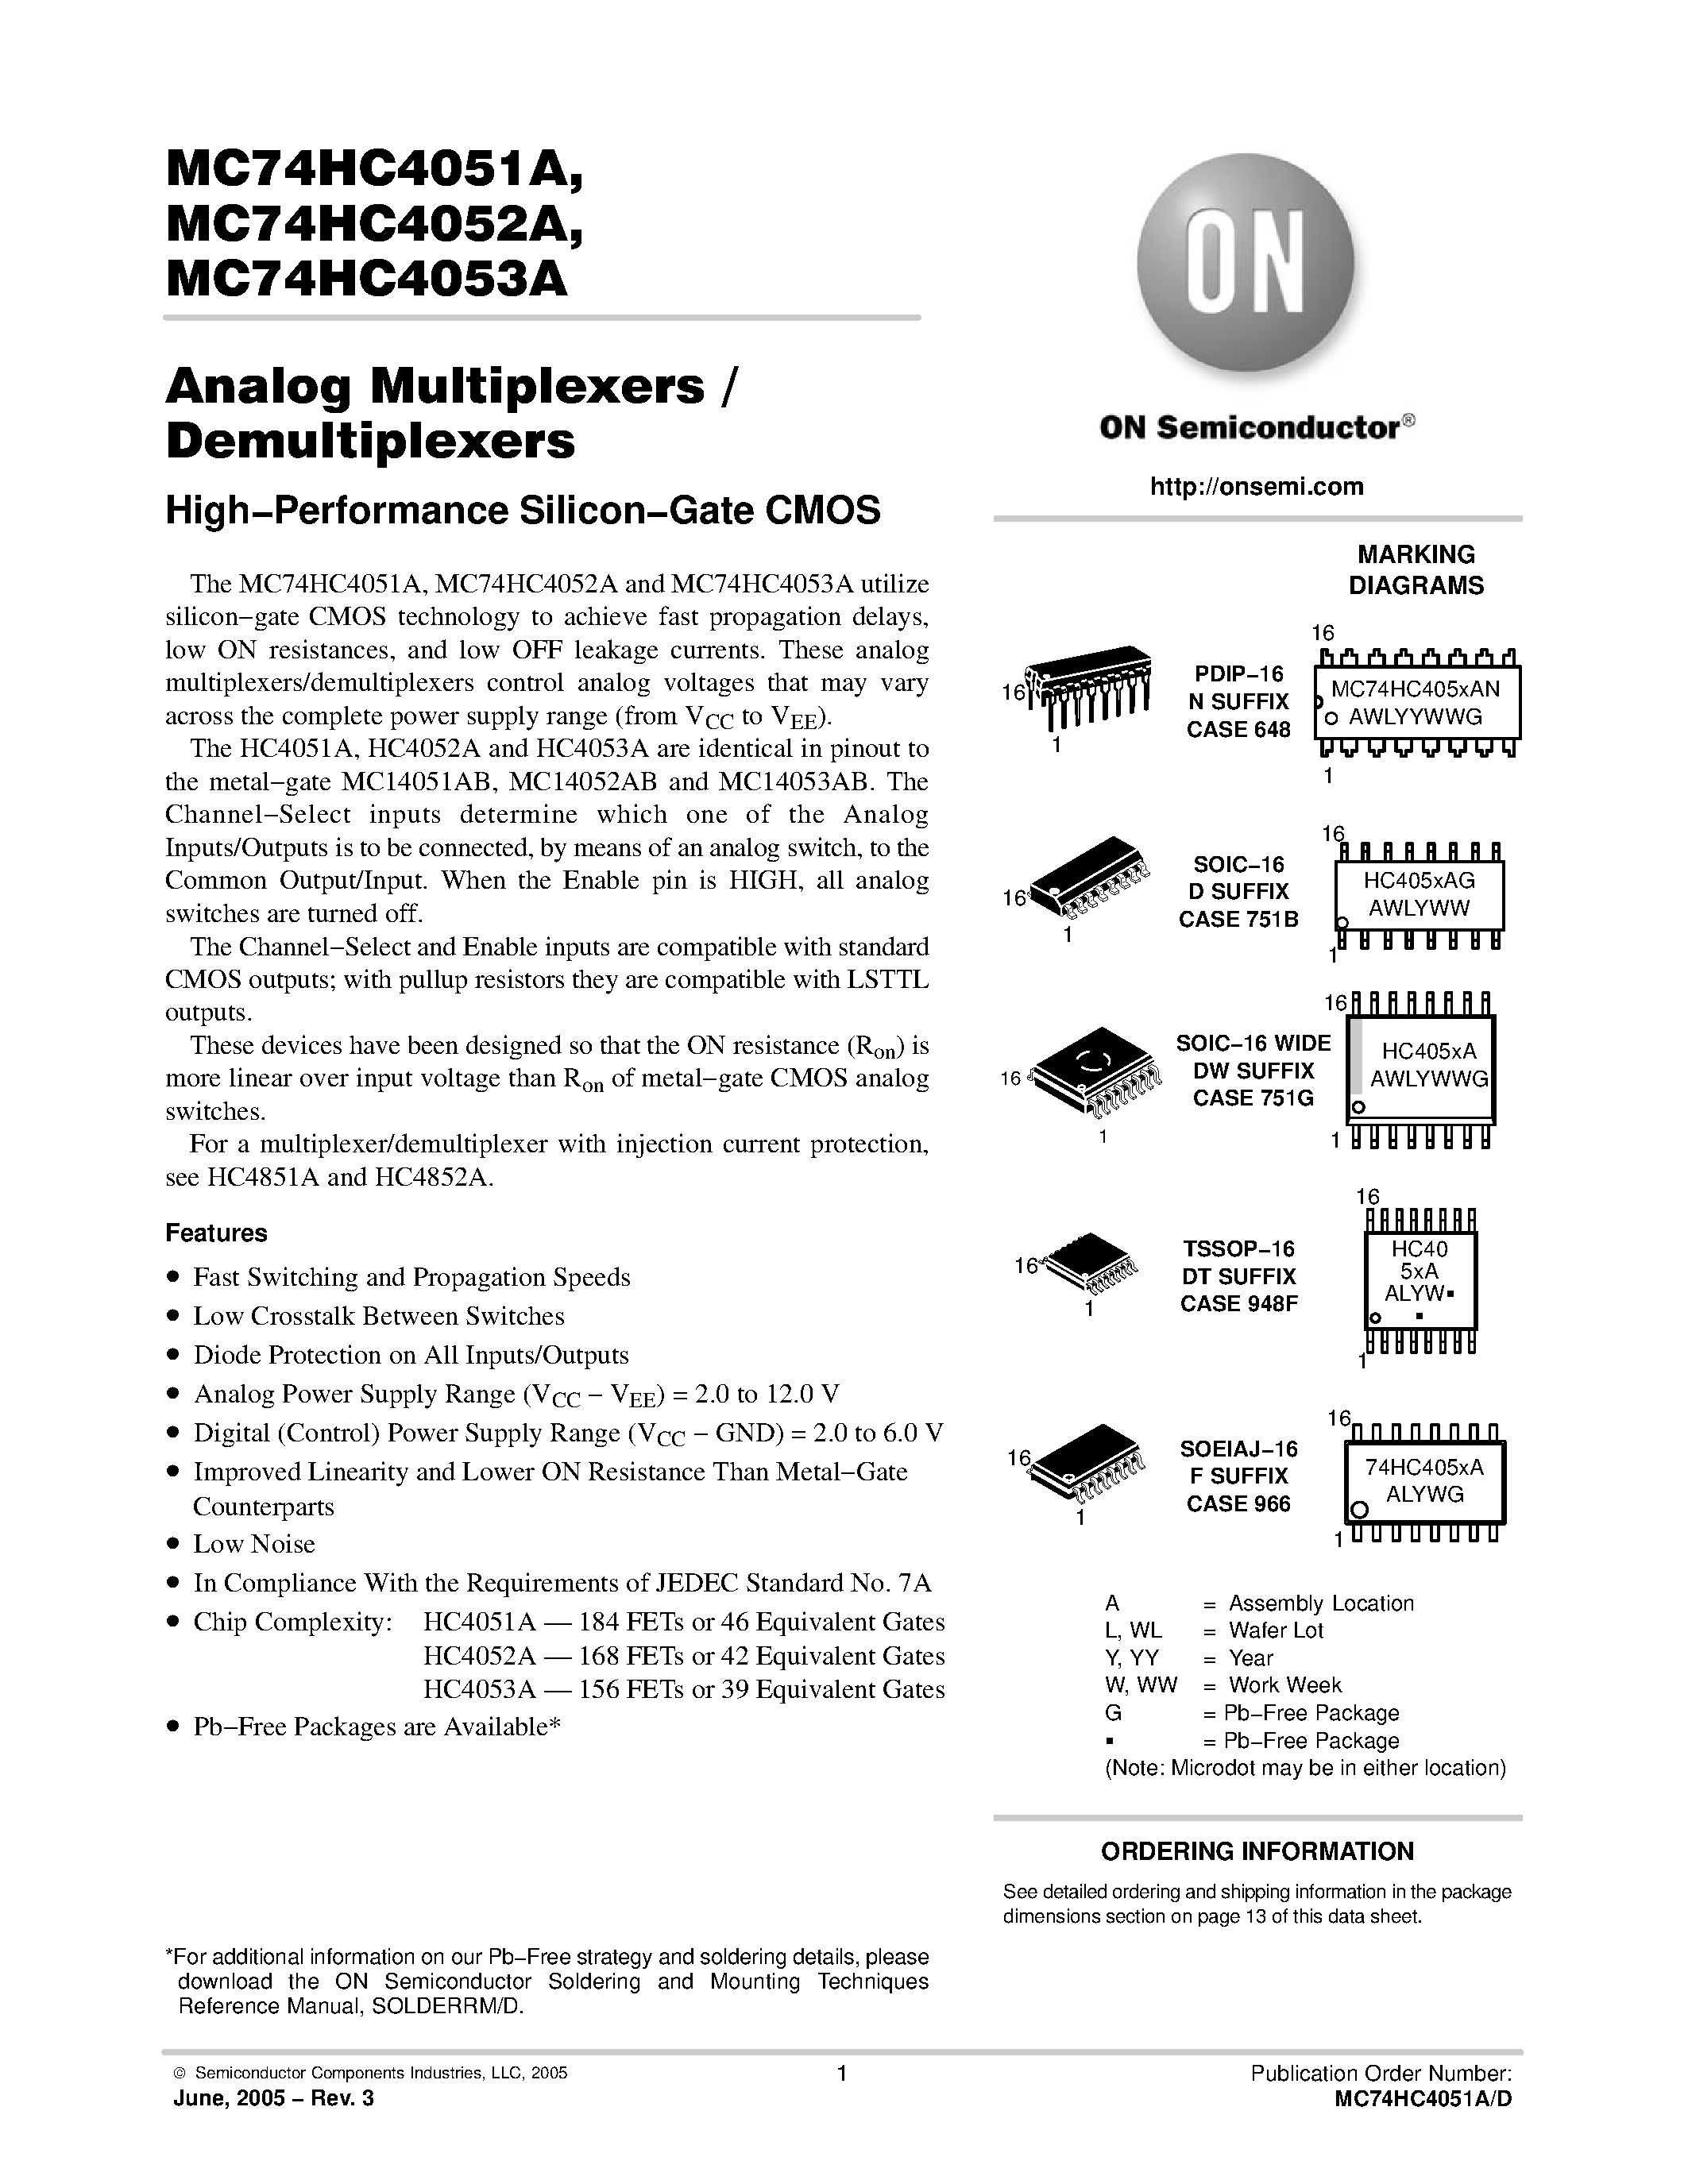 Datasheet MC74HC4051A - (MC74HC4051A - MC74HC4053A) Analog Multiplexers/Demultiplexers page 1